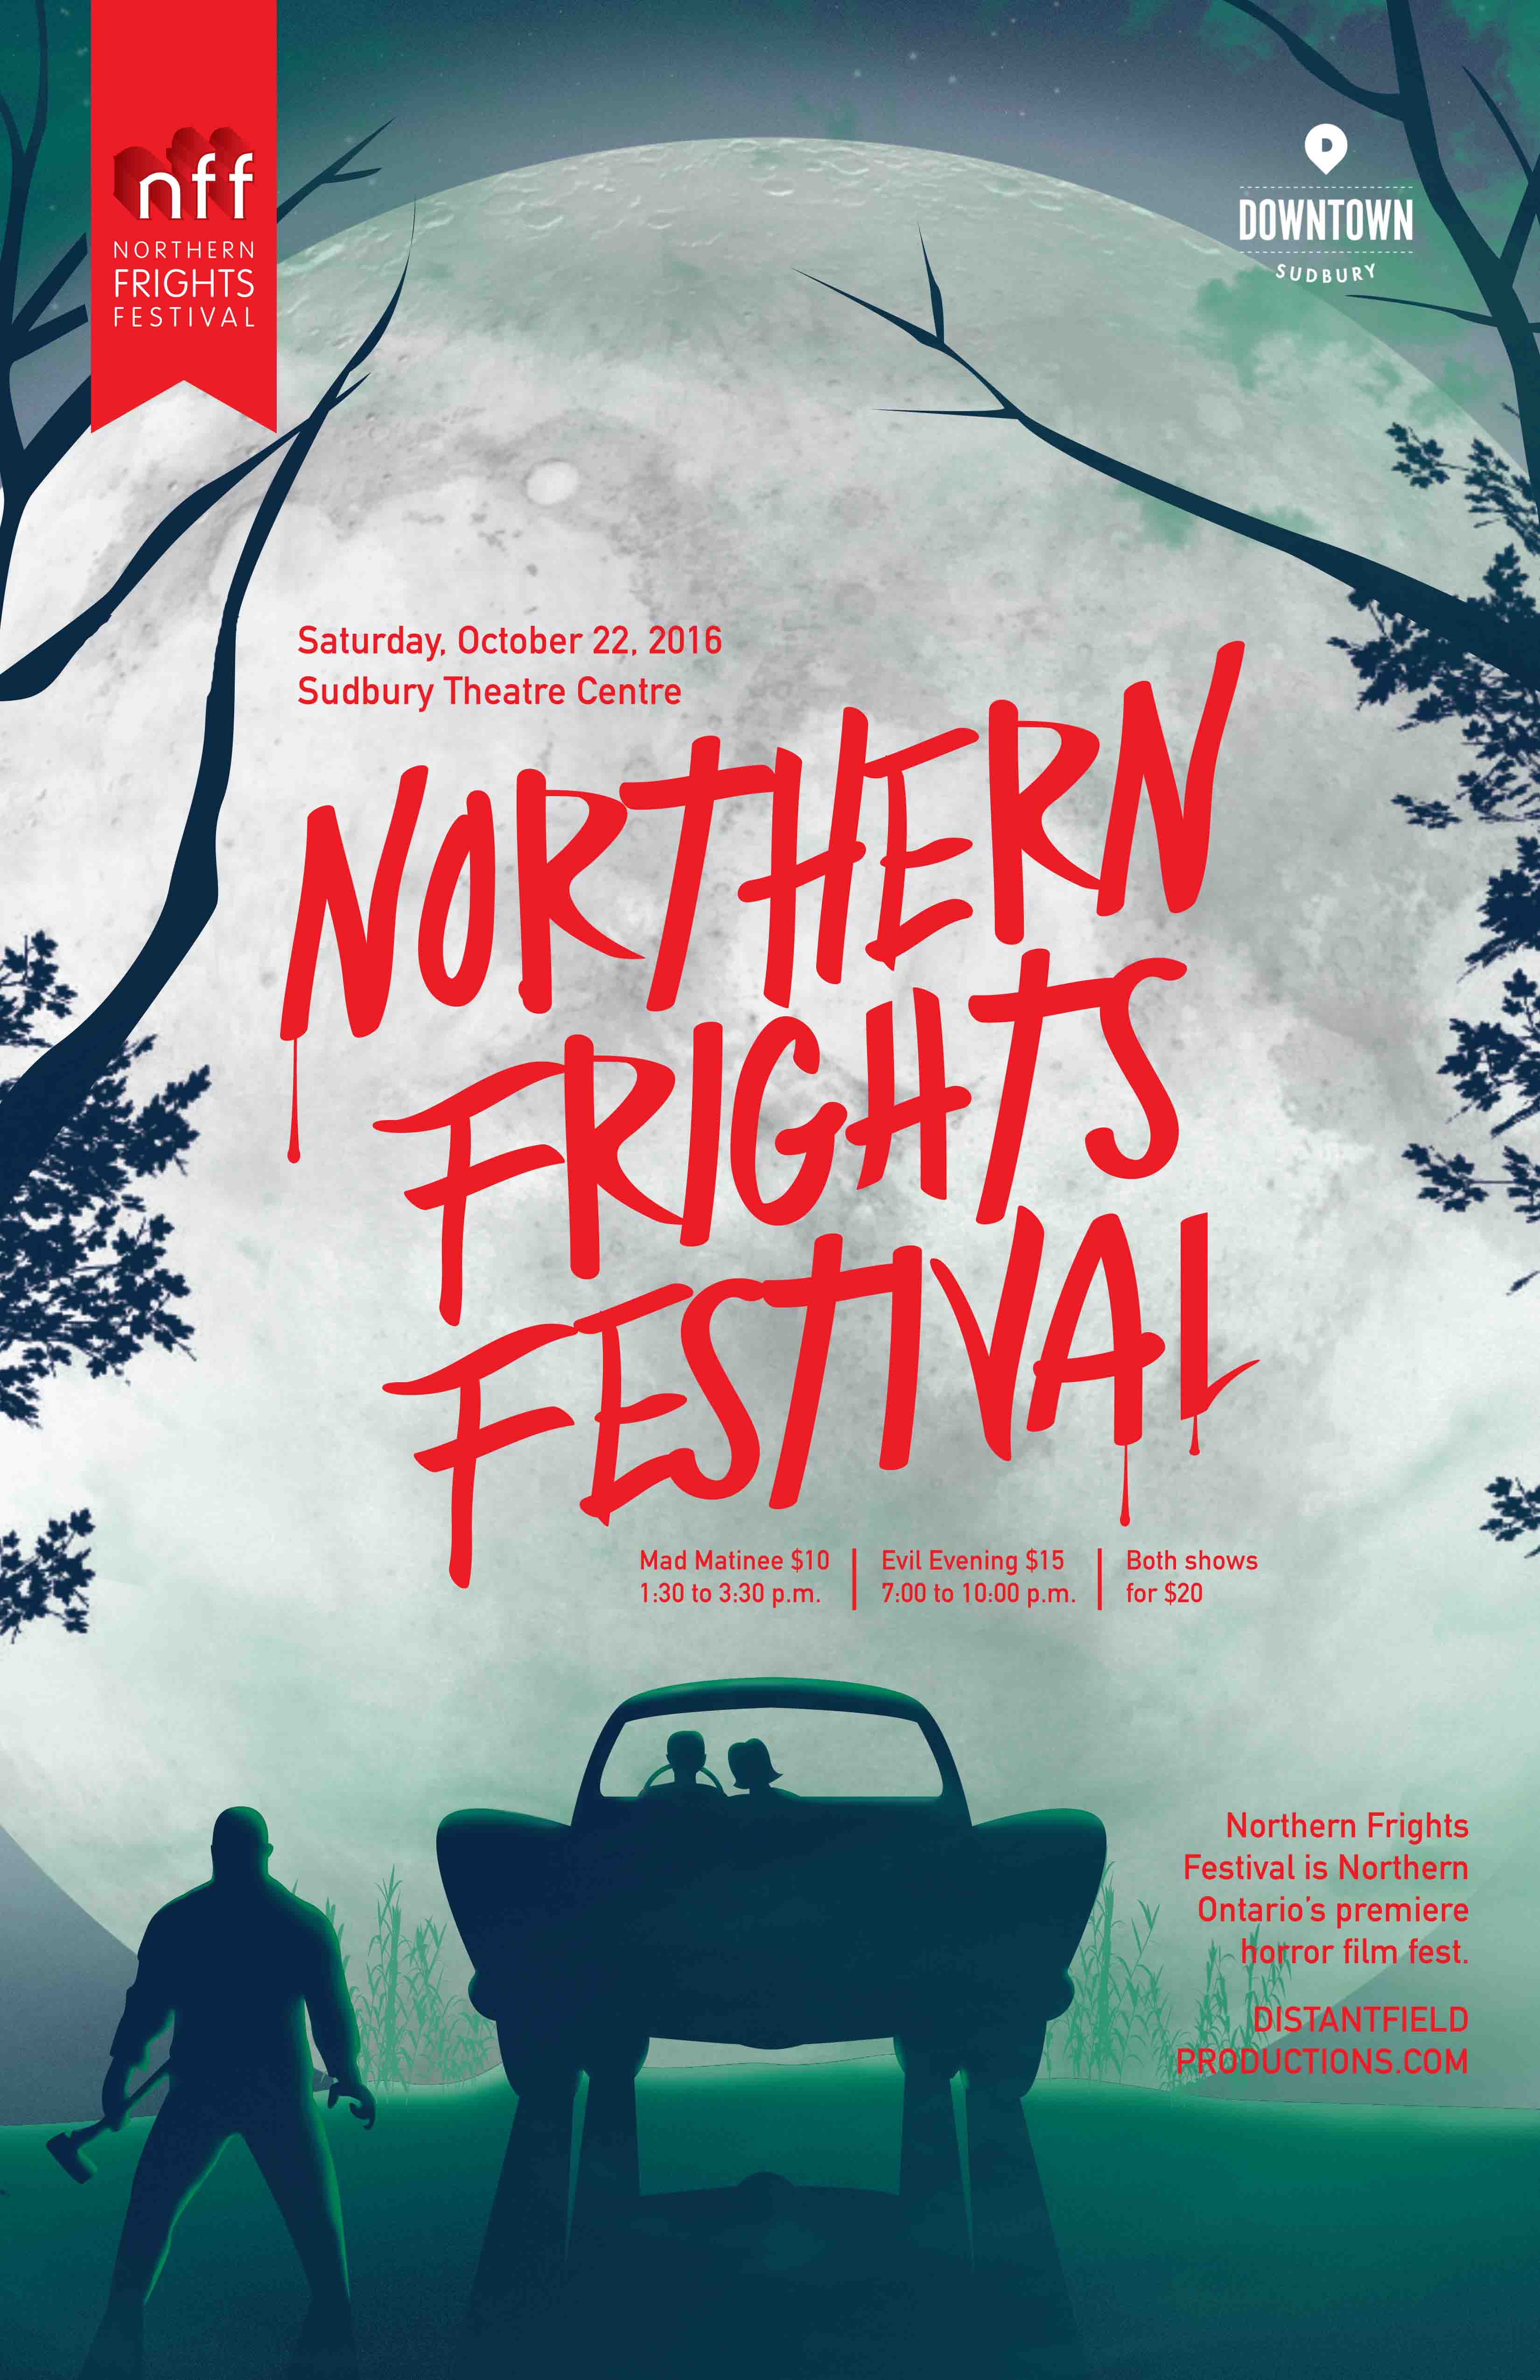 Northern Frights Festival: Northern Ontario's Premier Horror Film Fest